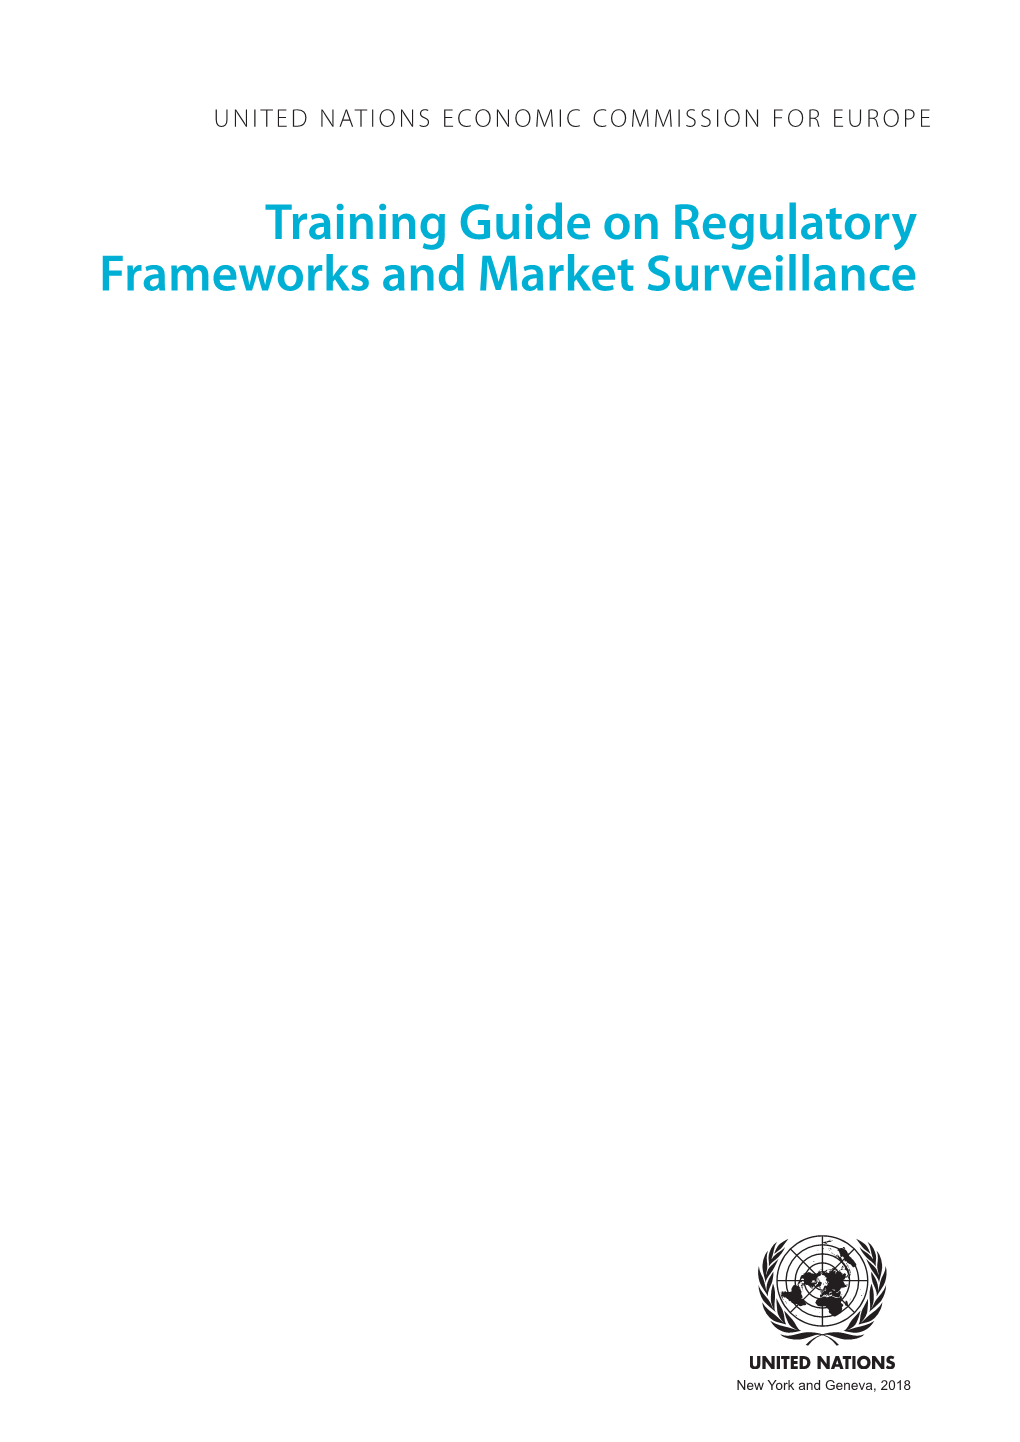 Training Guide on Regulatory Frameworks and Market Surveillance